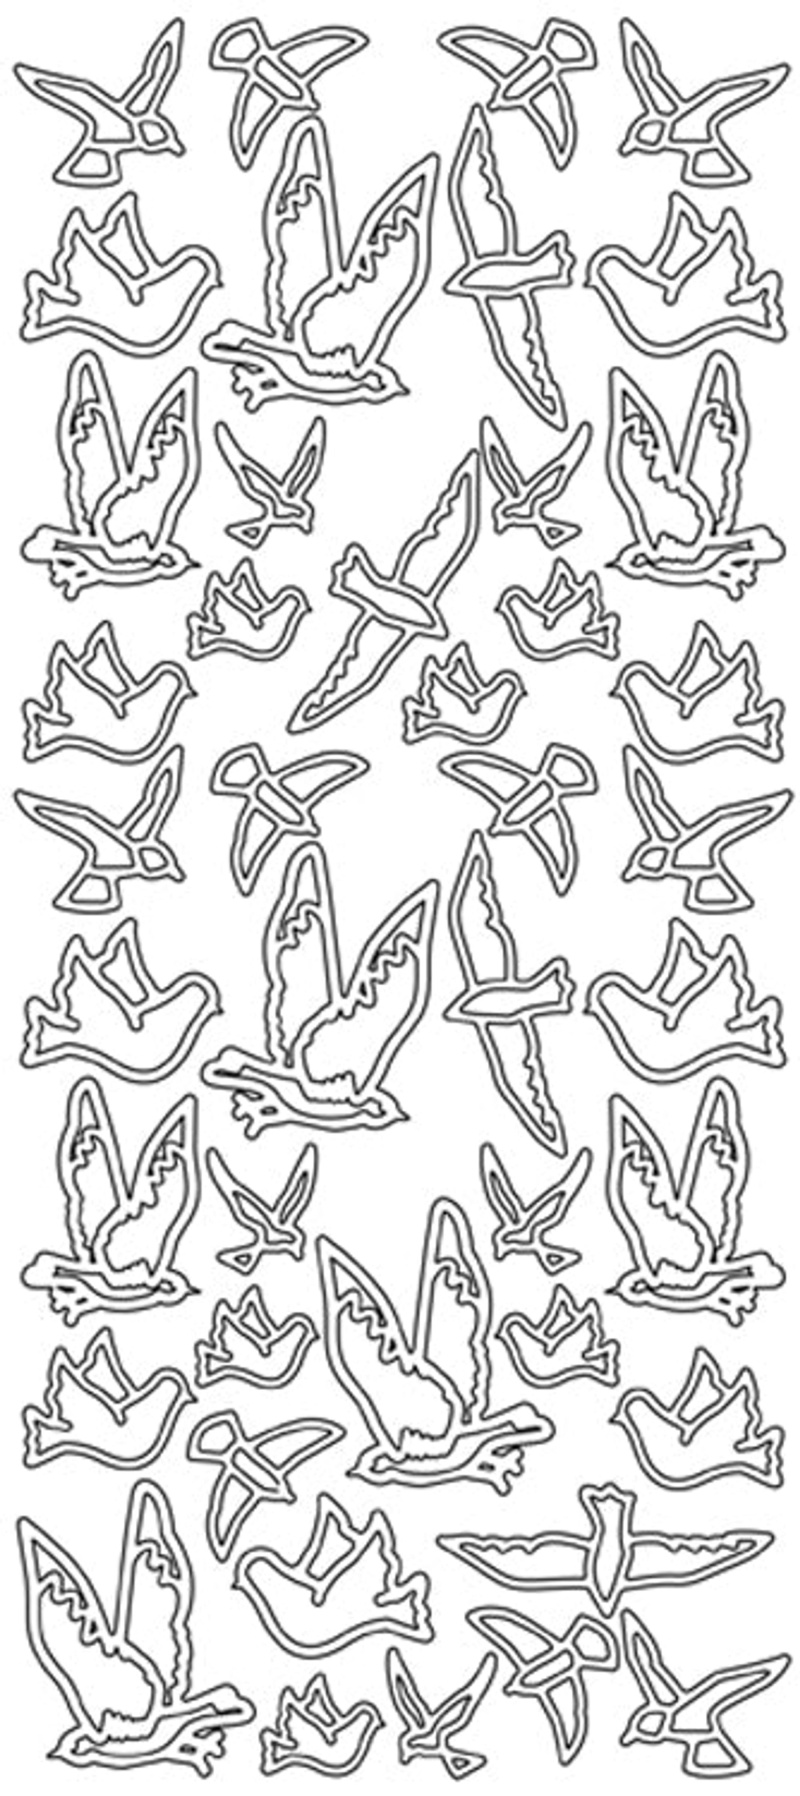 Peel-Off Stickers - Flying Birds